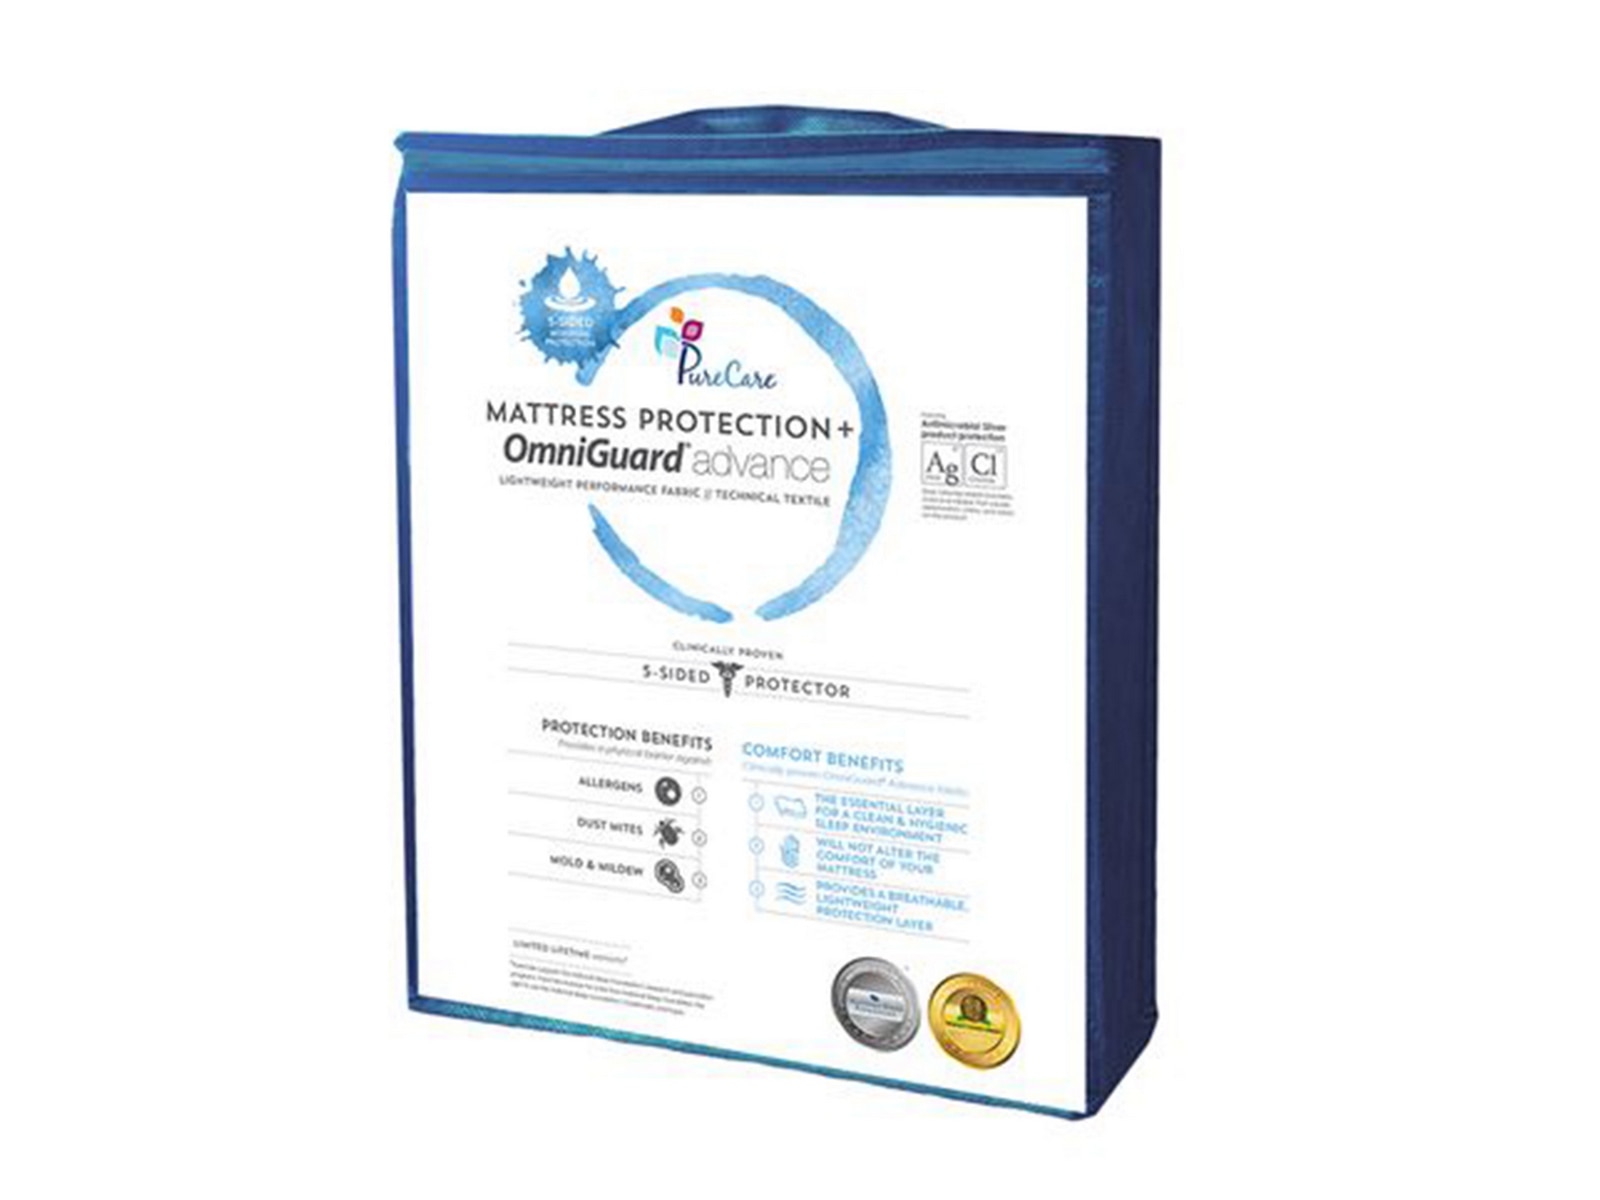 purecare mattress protector washing instructions